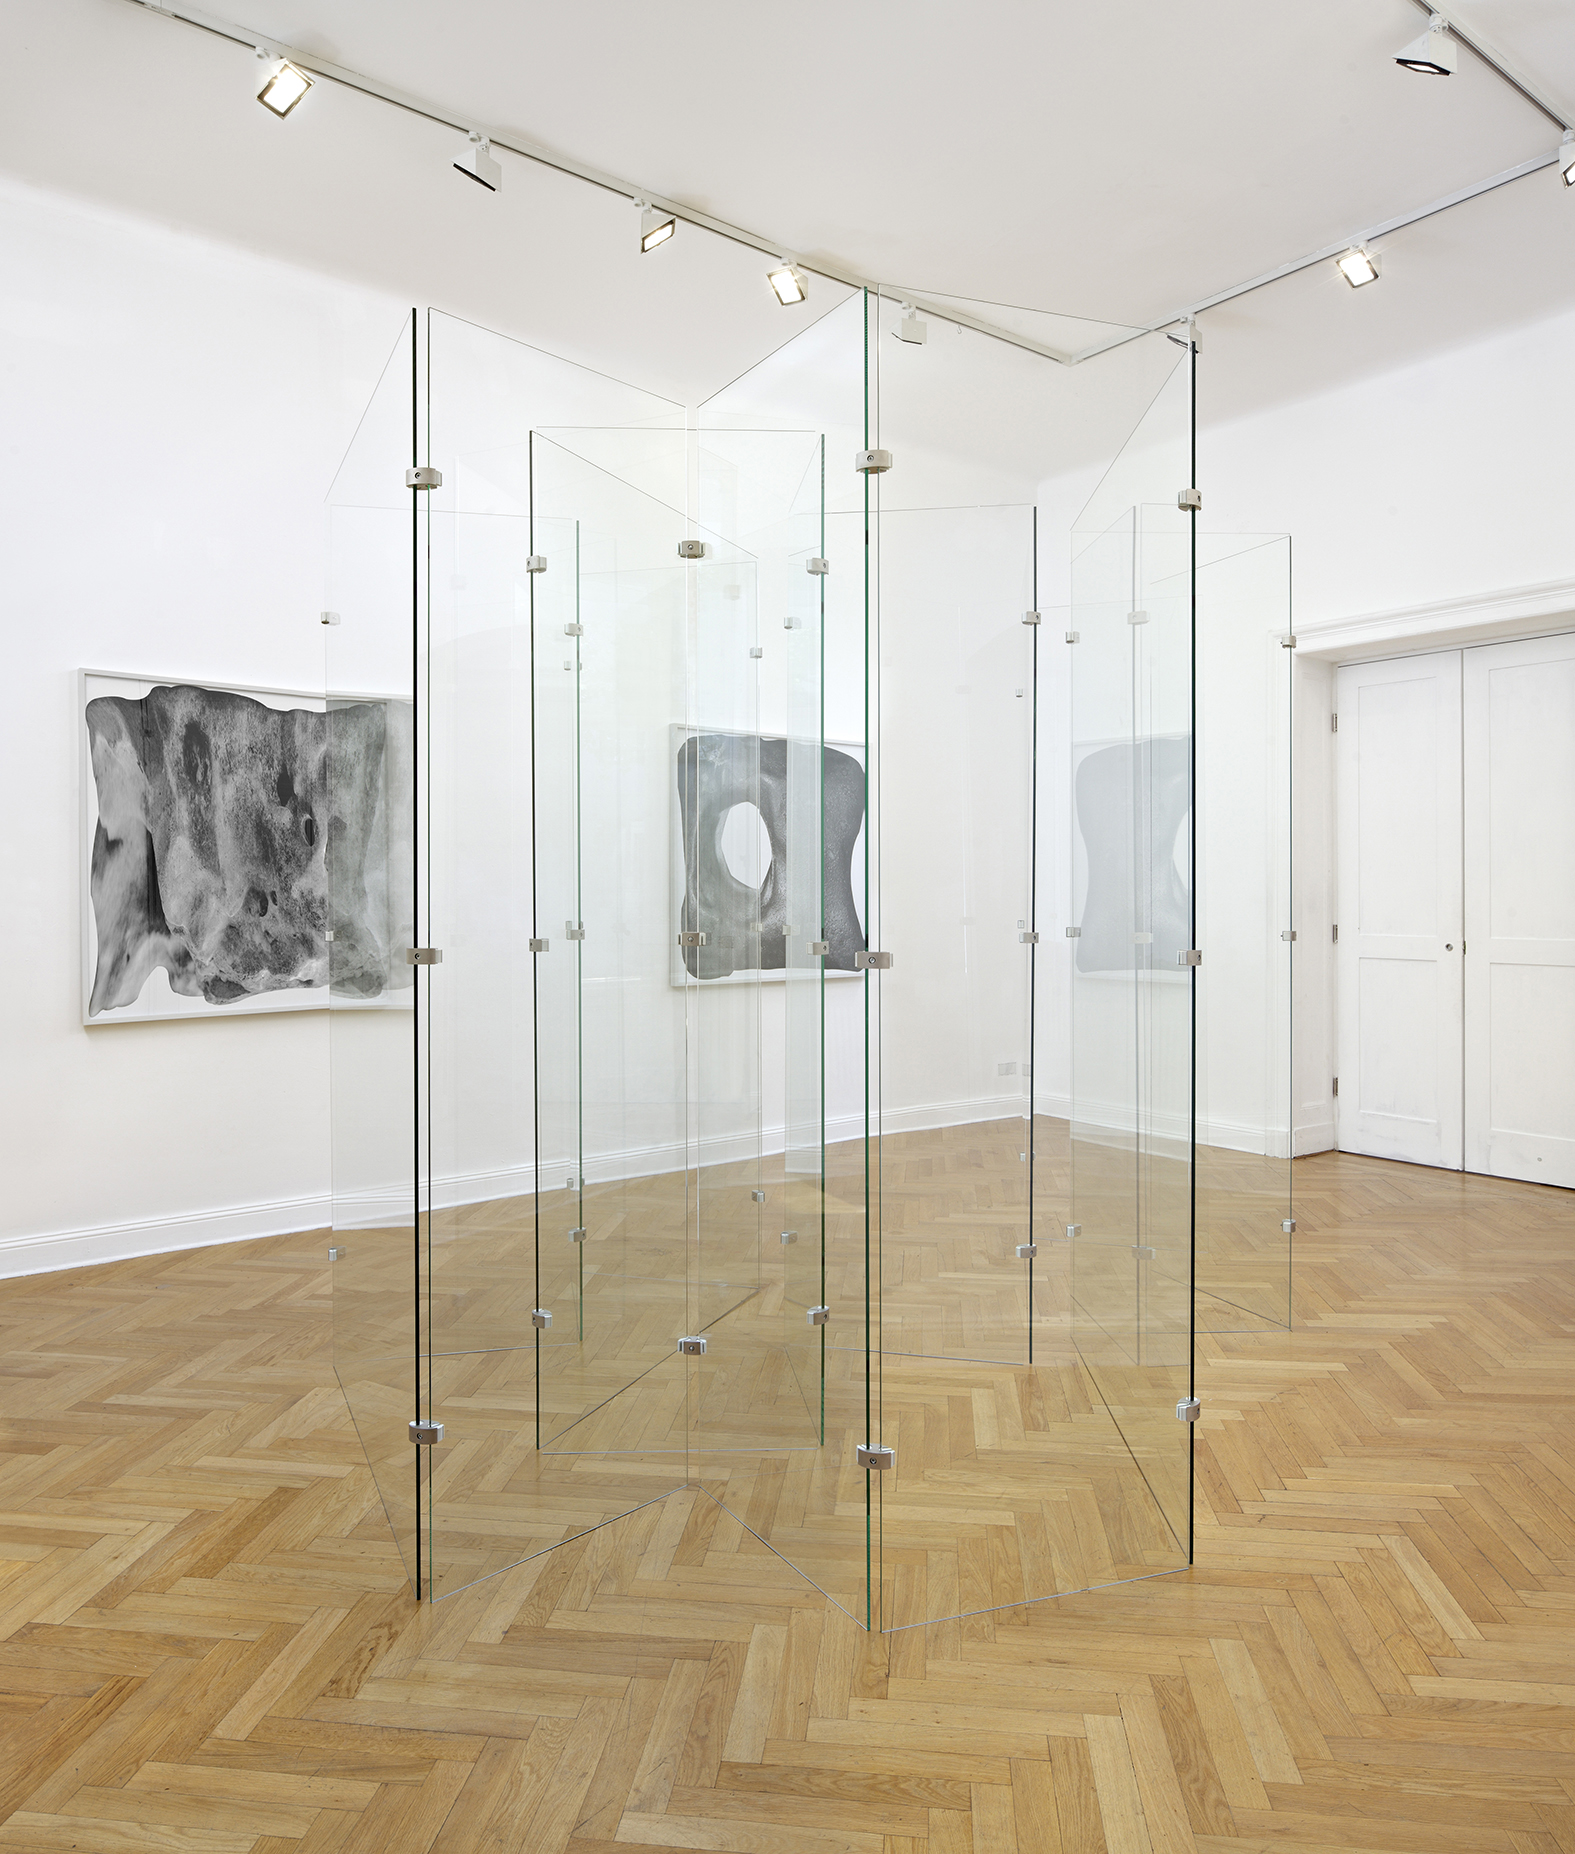 Nicholas Pelzer, 'Custom Utility' (2014) exhibition view. Photo by Hans-Georg Gaul. Image courtesy Future Gallery.